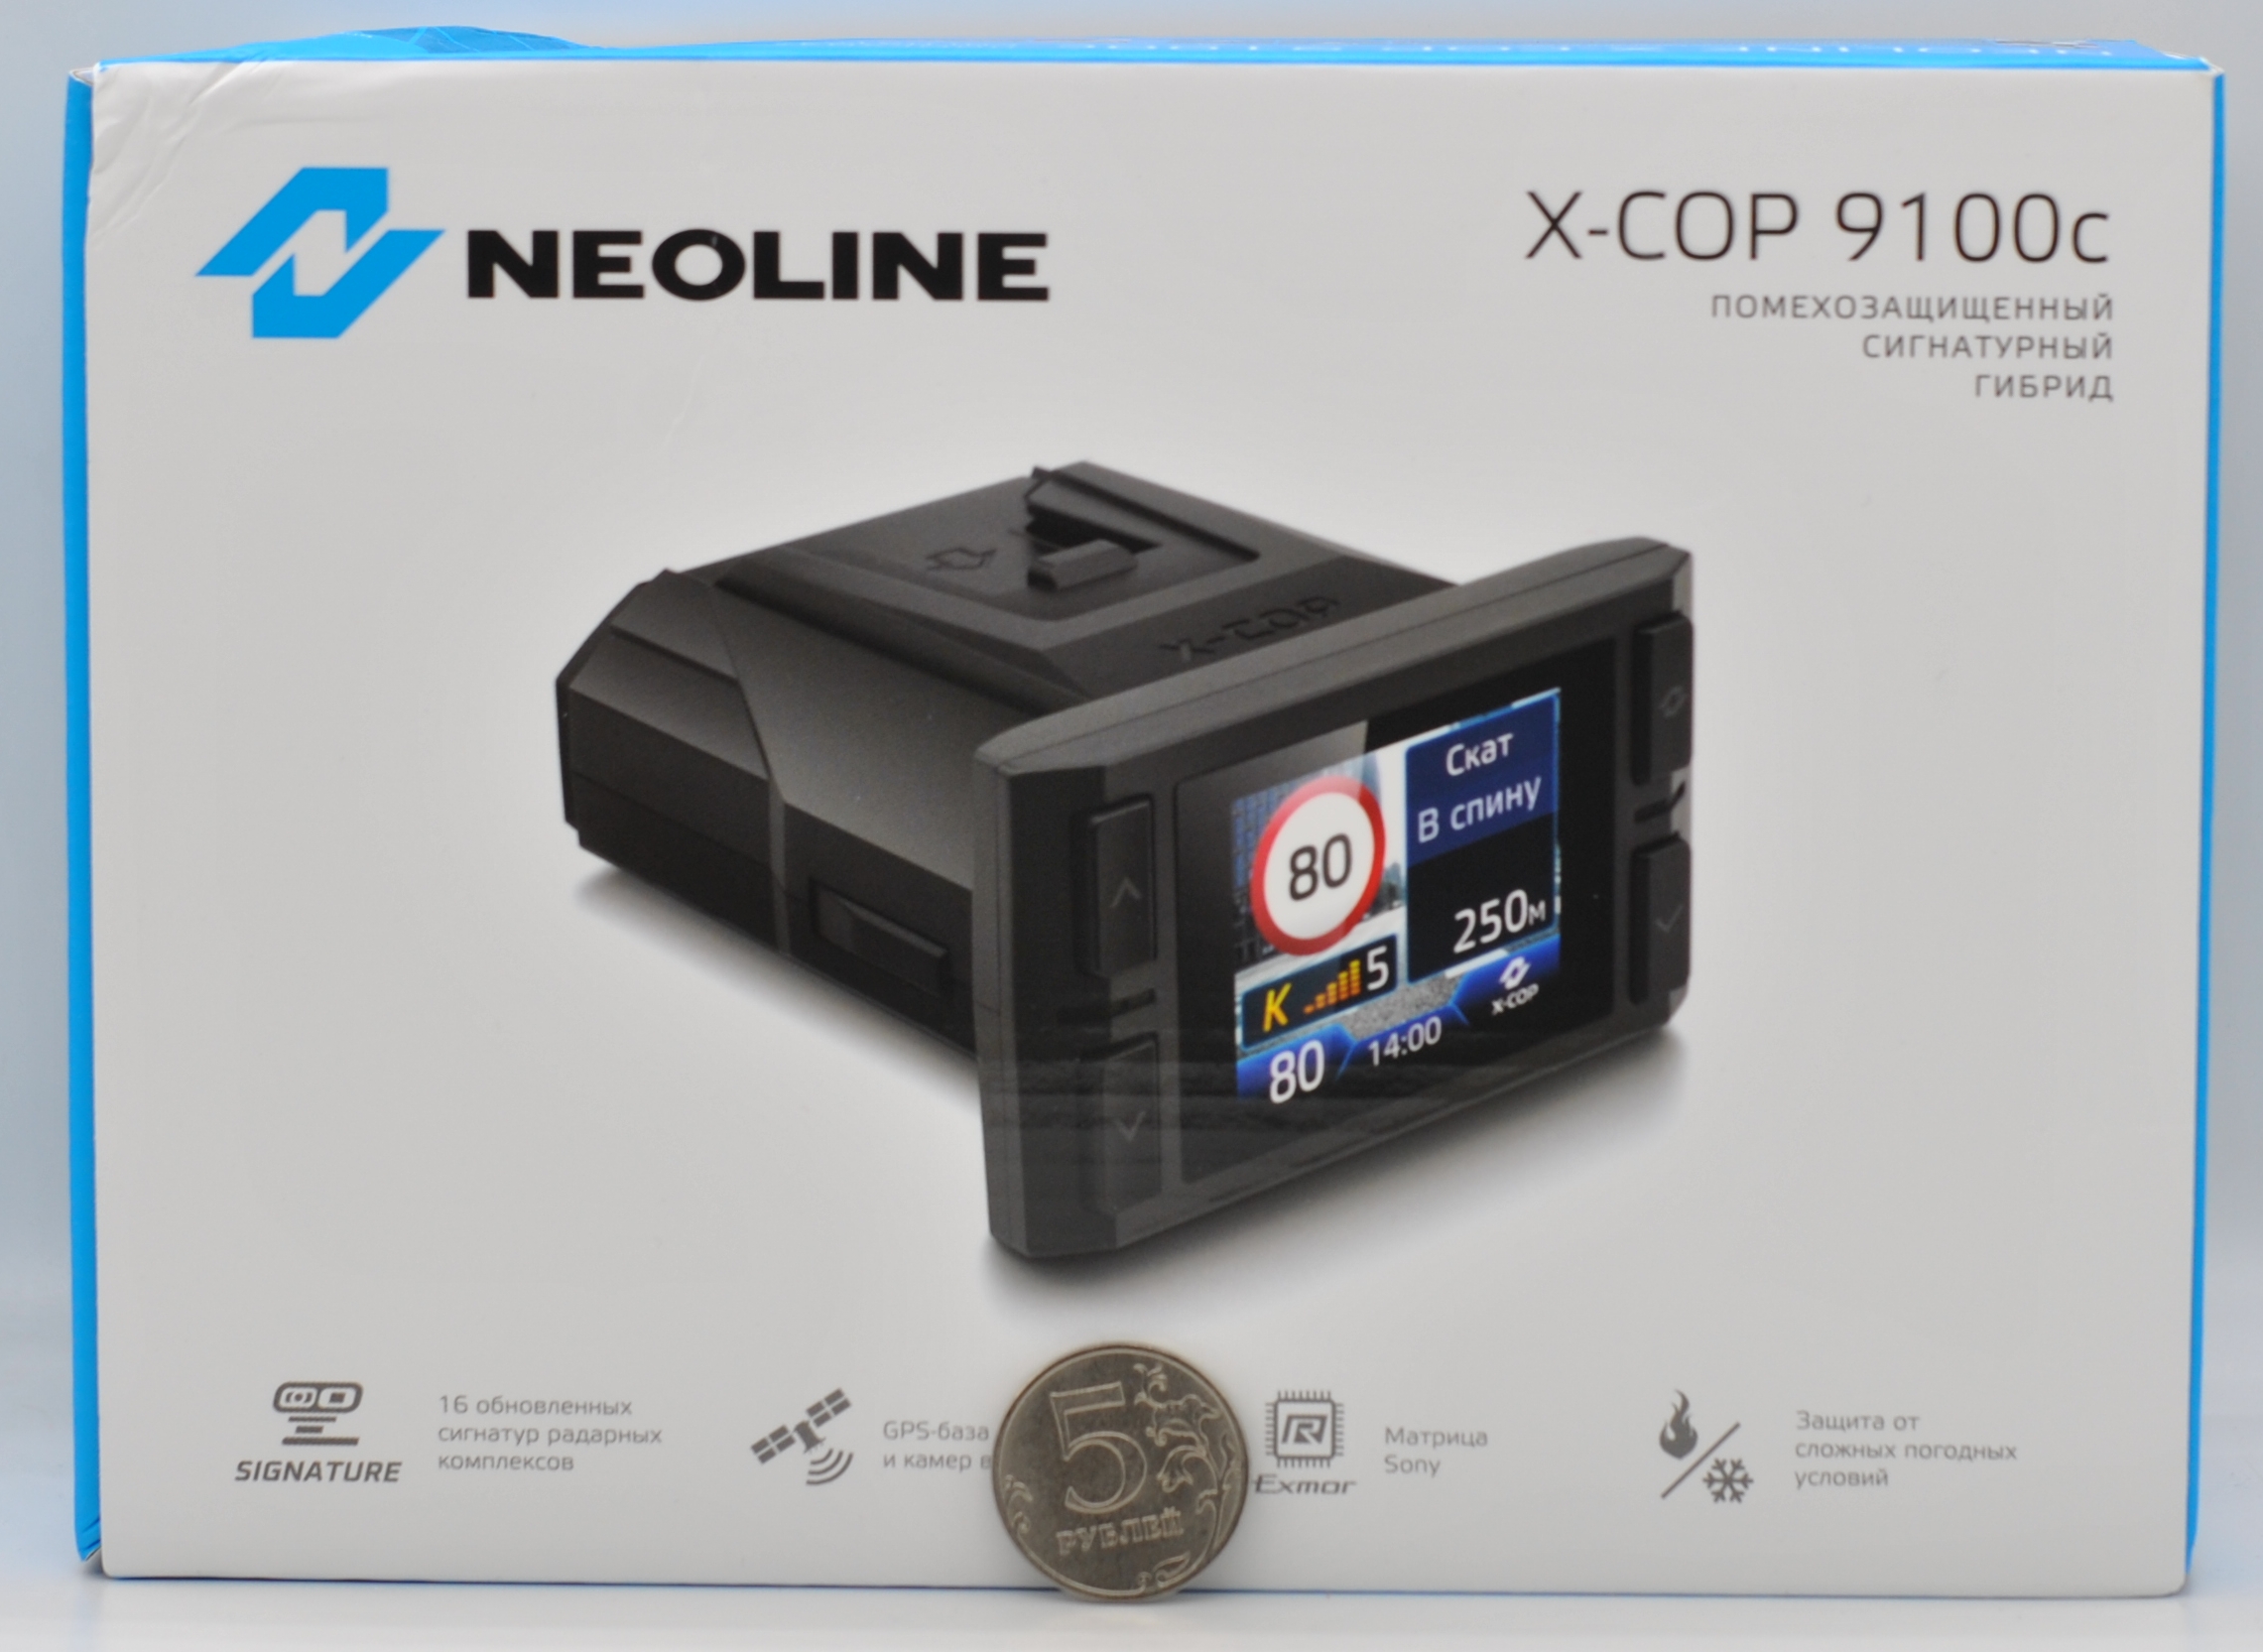 Neoline x cop гибрид